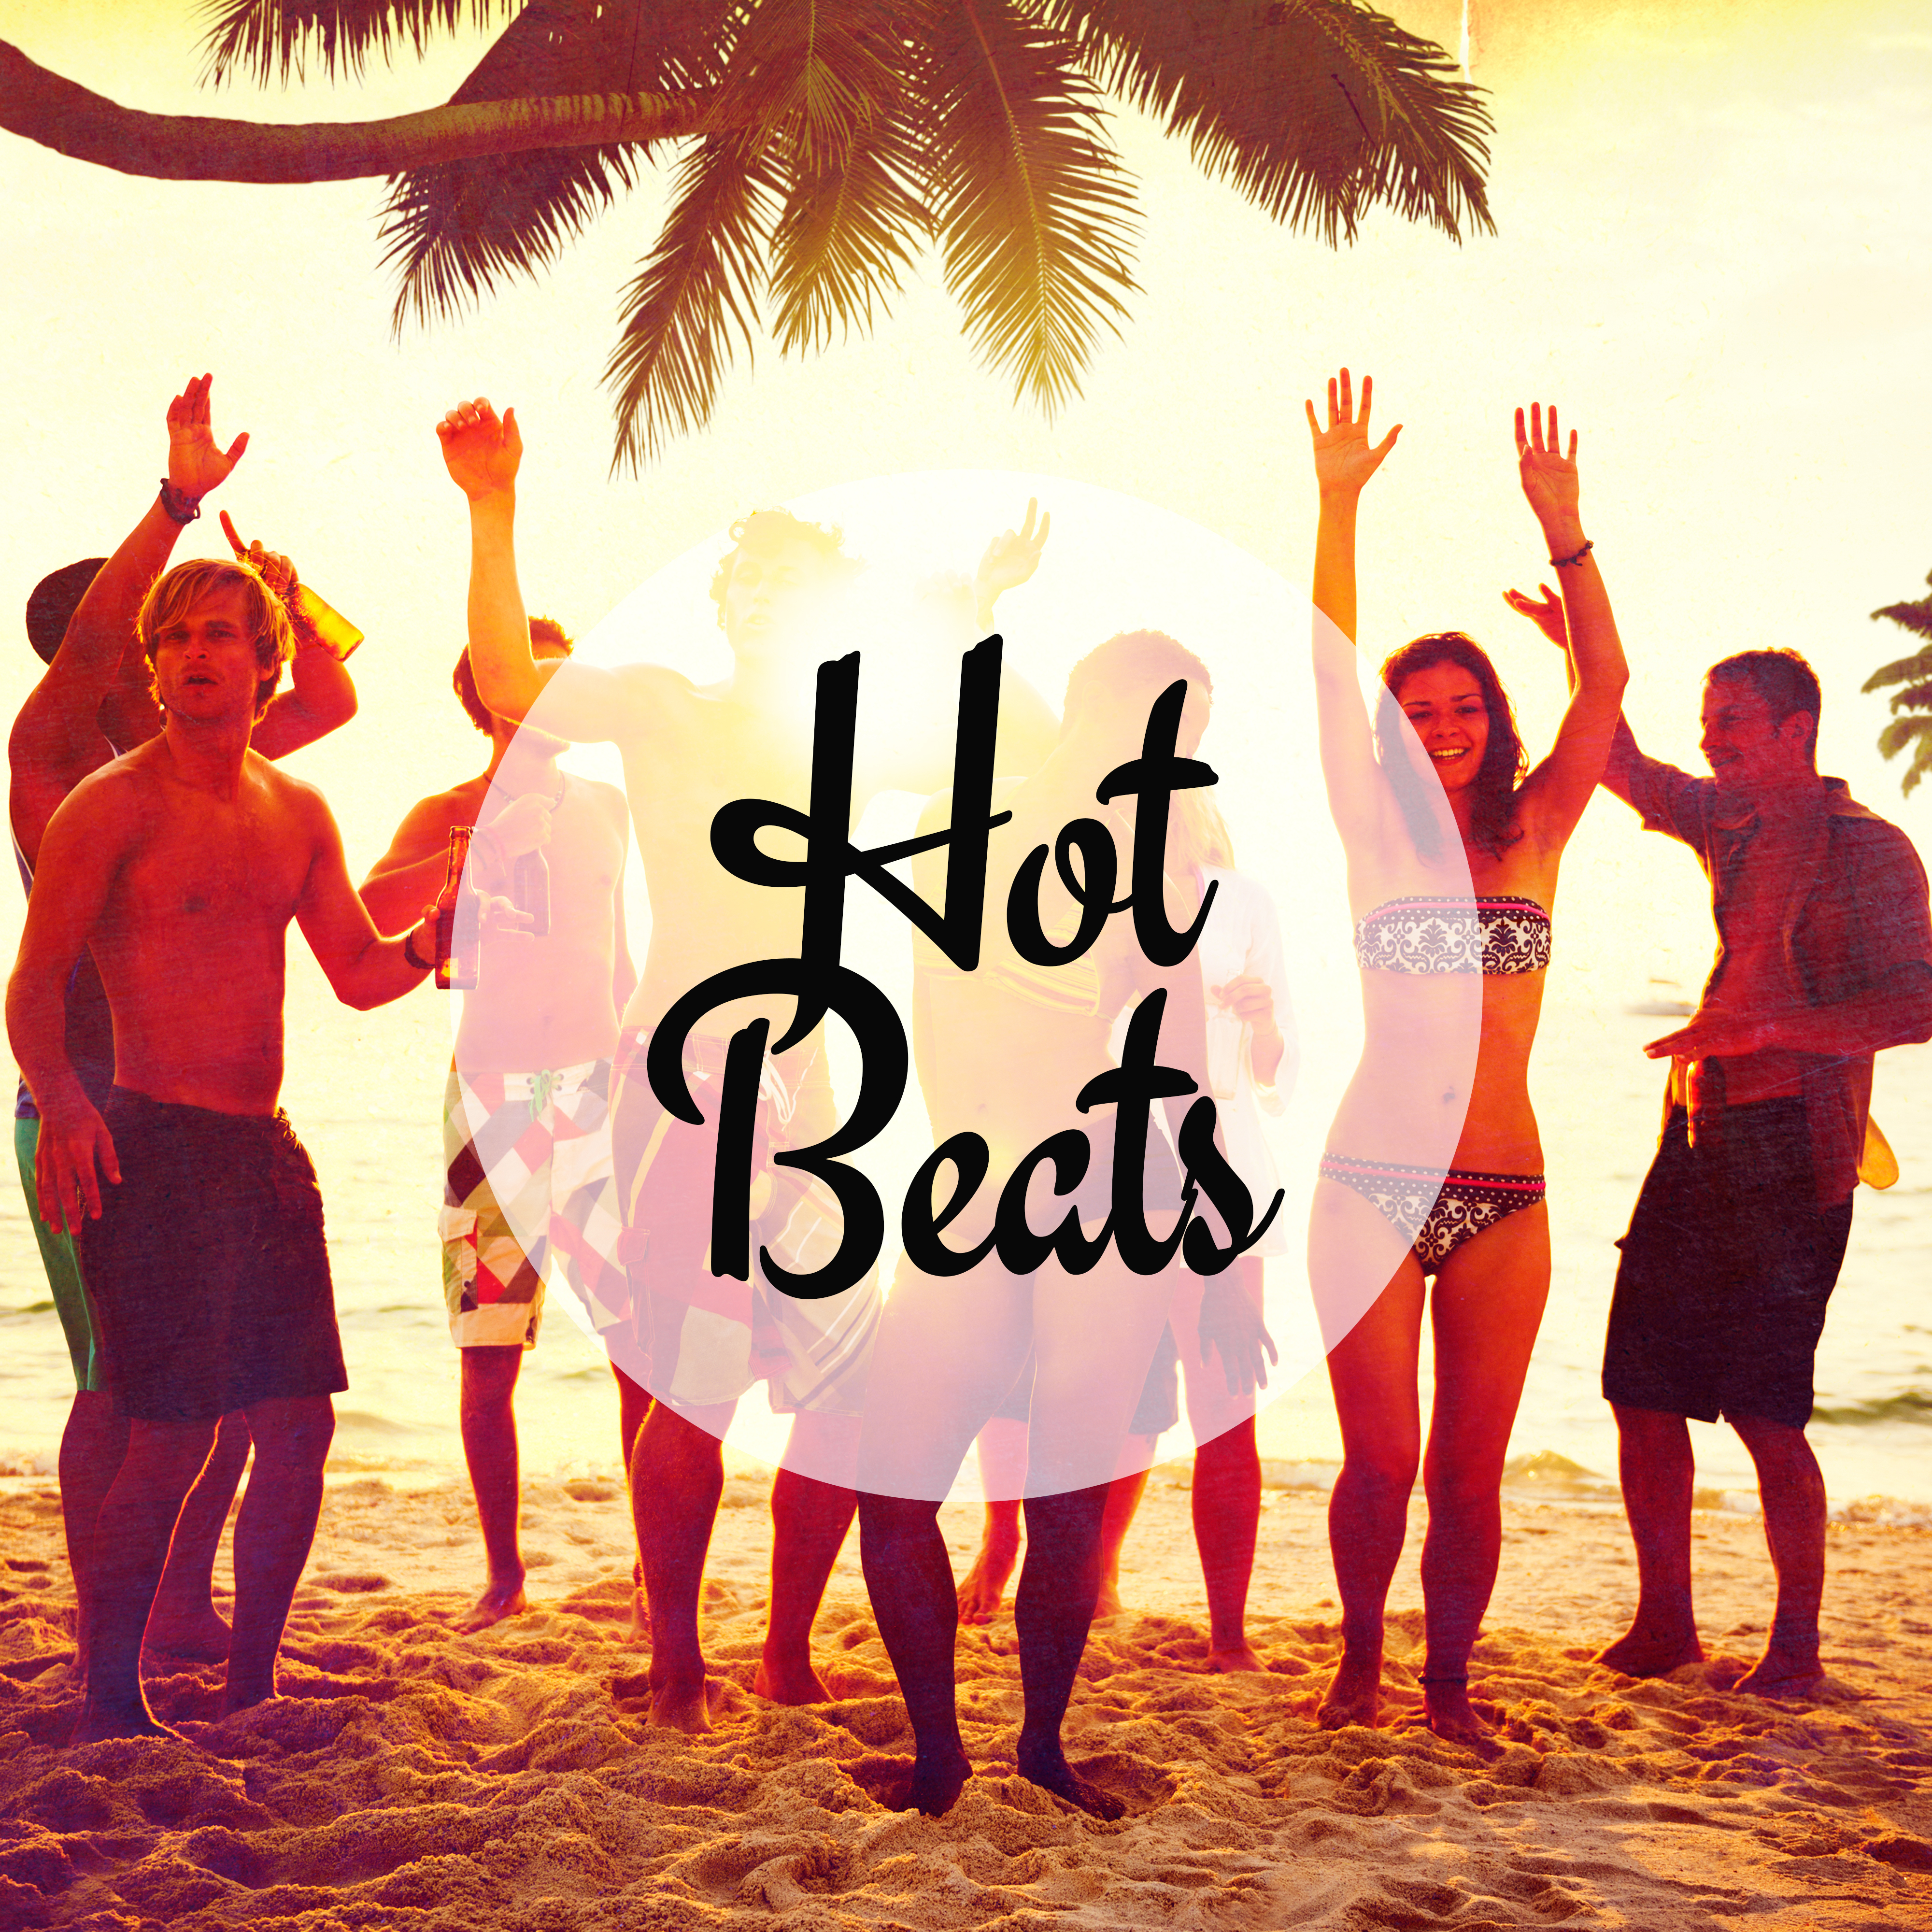 Hot Beats